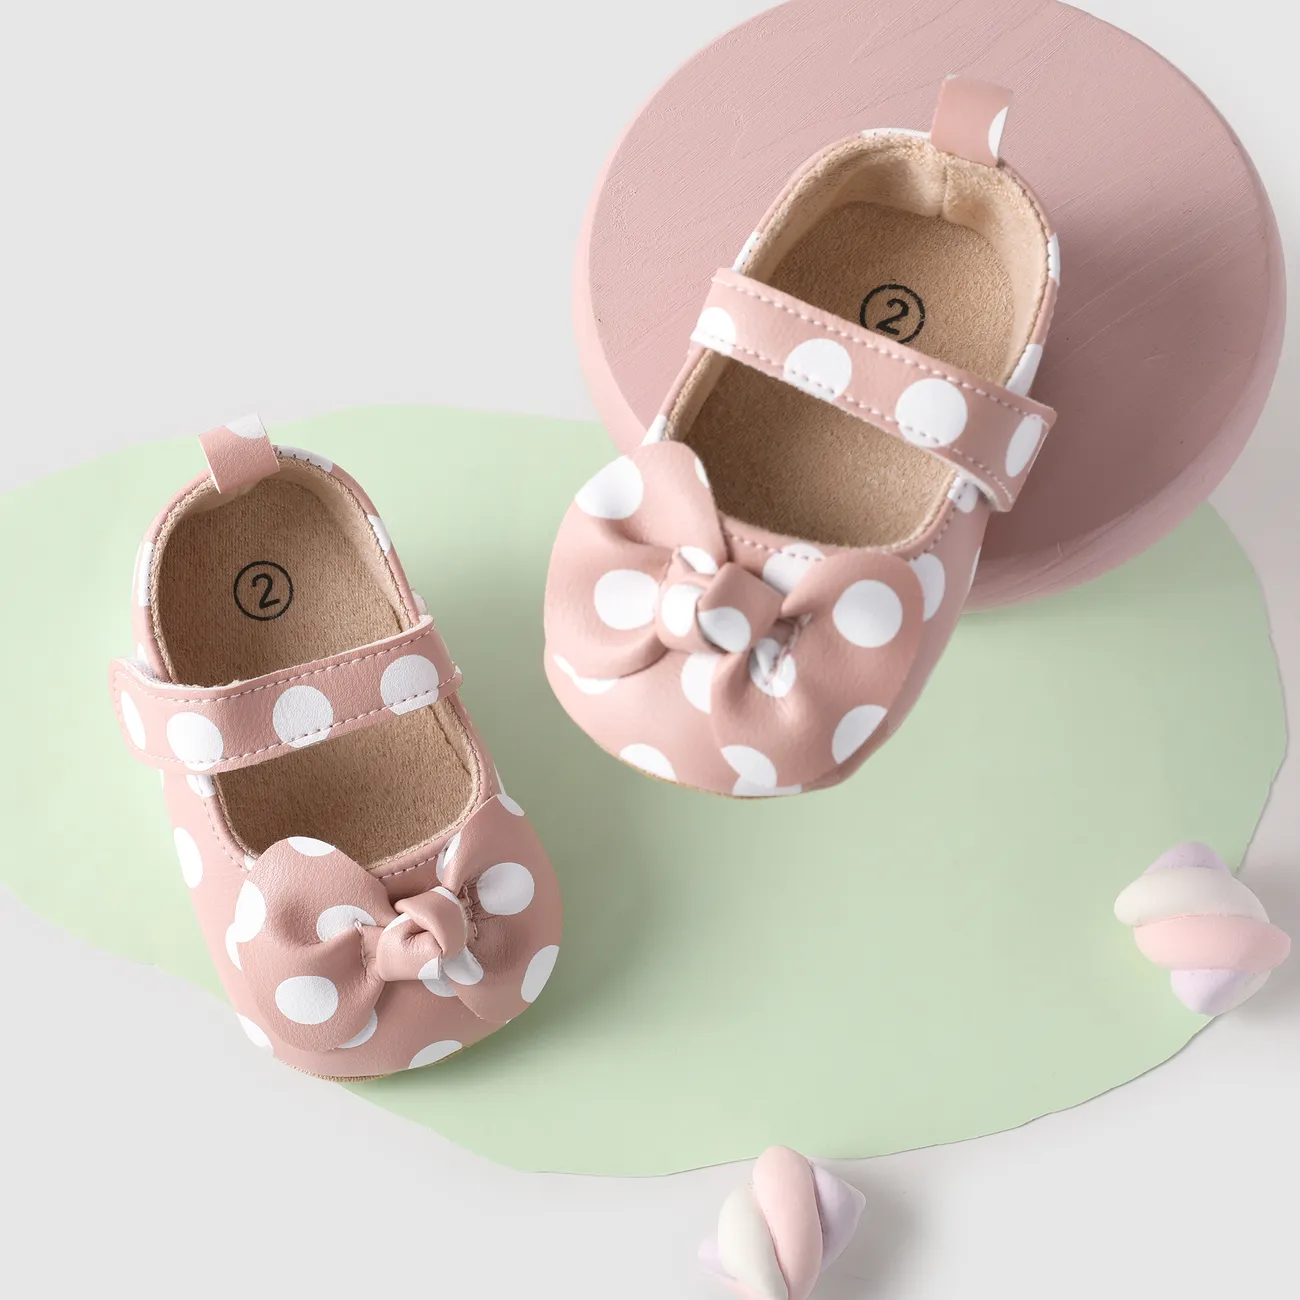 Baby Girl Casual Polka Dot Pattern Bowtie Velcro Prewalker Shoes Pink big image 1